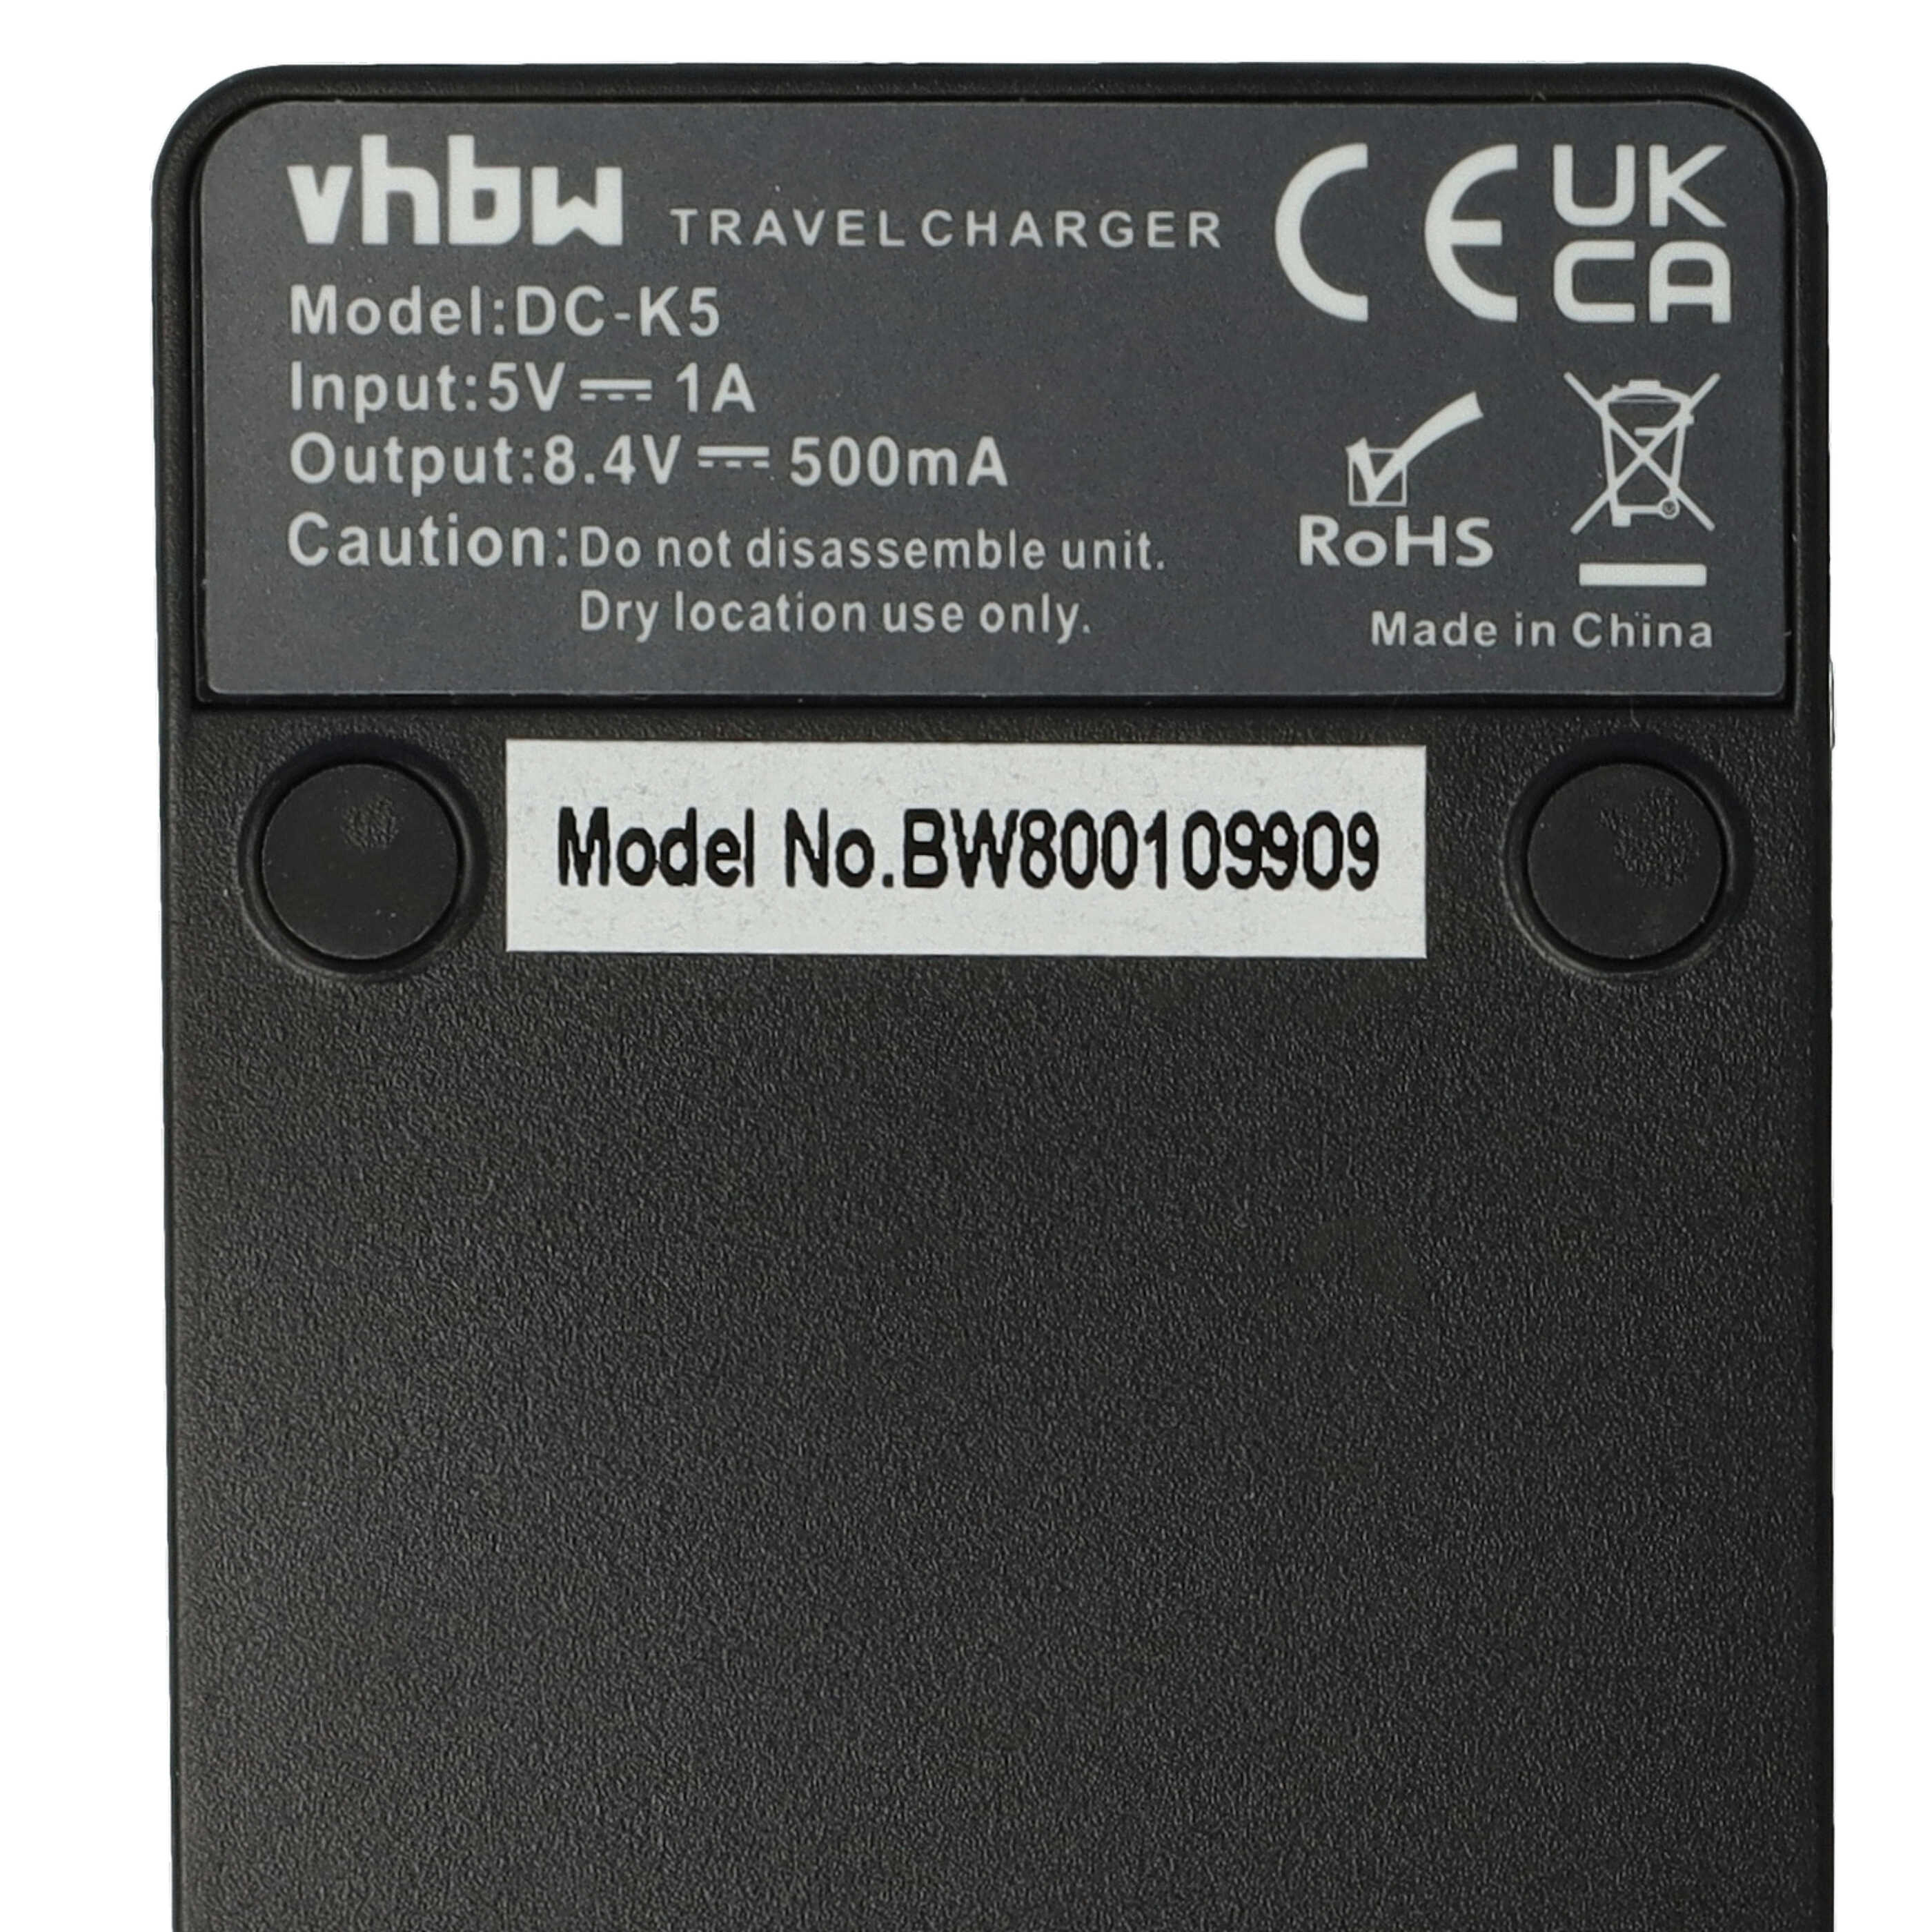 Battery Charger suitable for GR-D720 Camera etc. - 0.5 A, 8.4 V